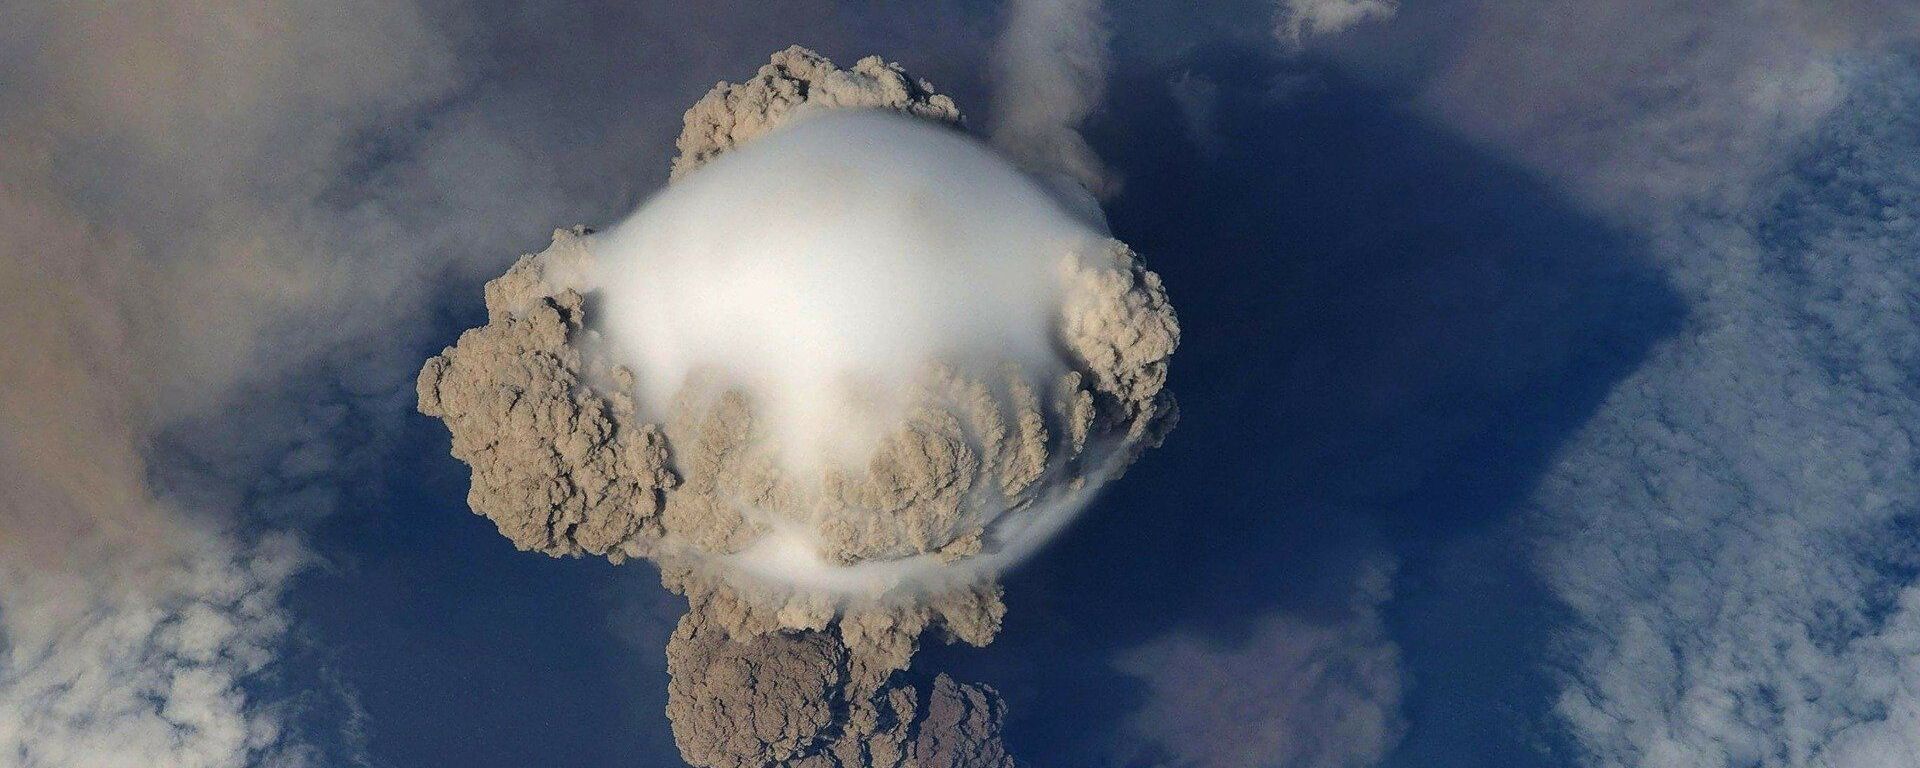 Erupción de un volcán (imagen referencial) - Sputnik Mundo, 1920, 28.06.2021